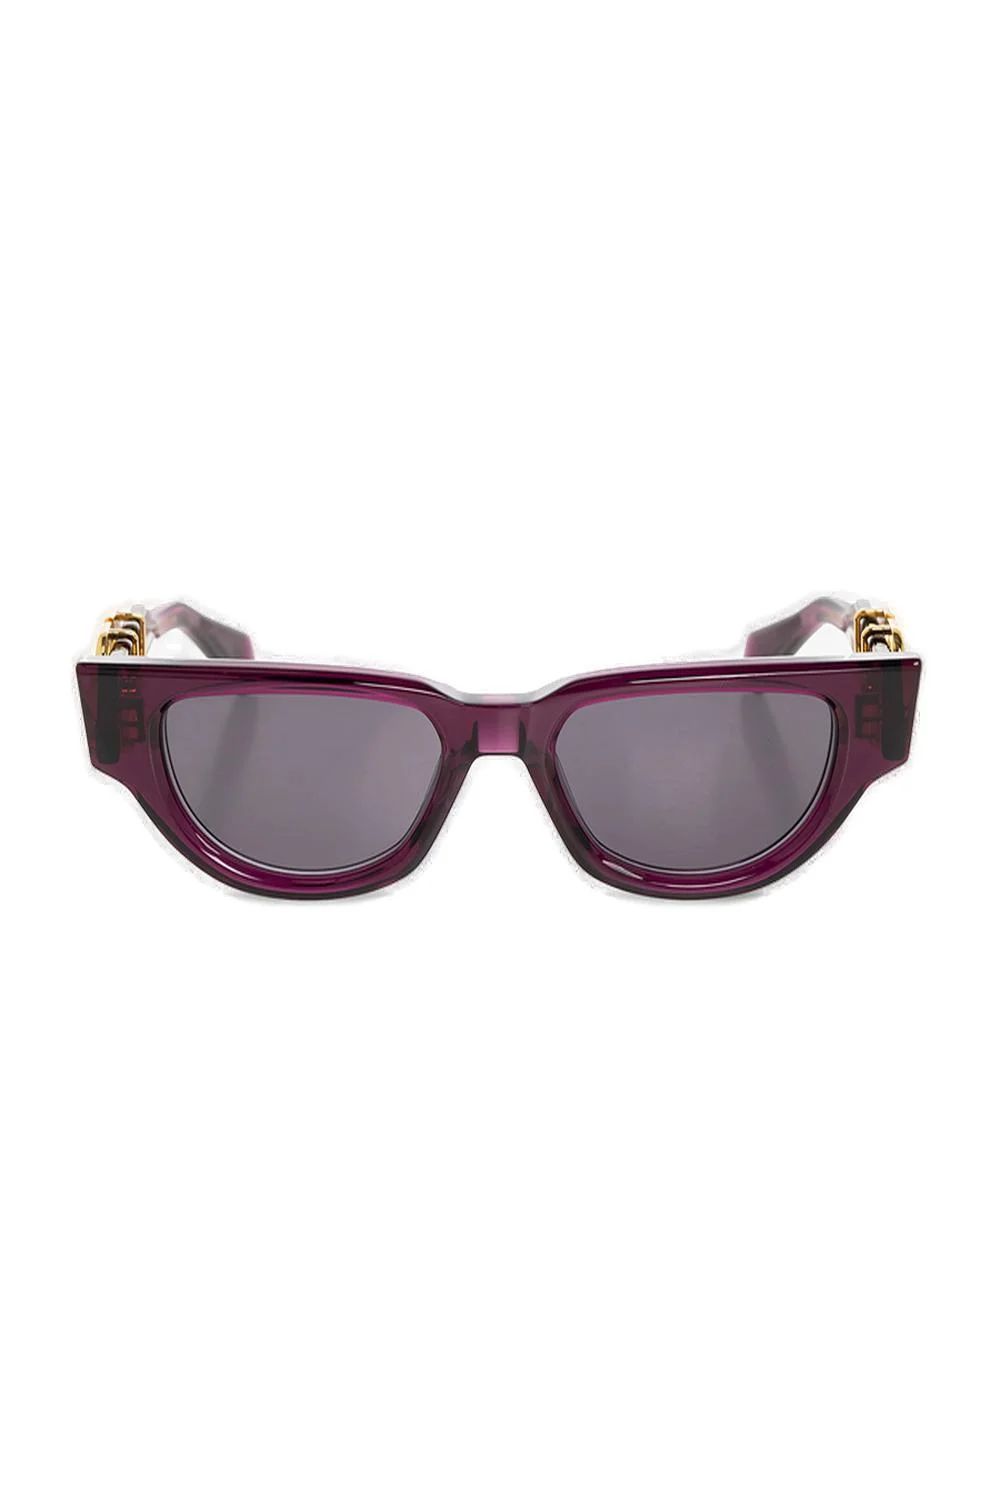 Valentino Eyewear Cat-Eye Sunglasses | Cettire Global